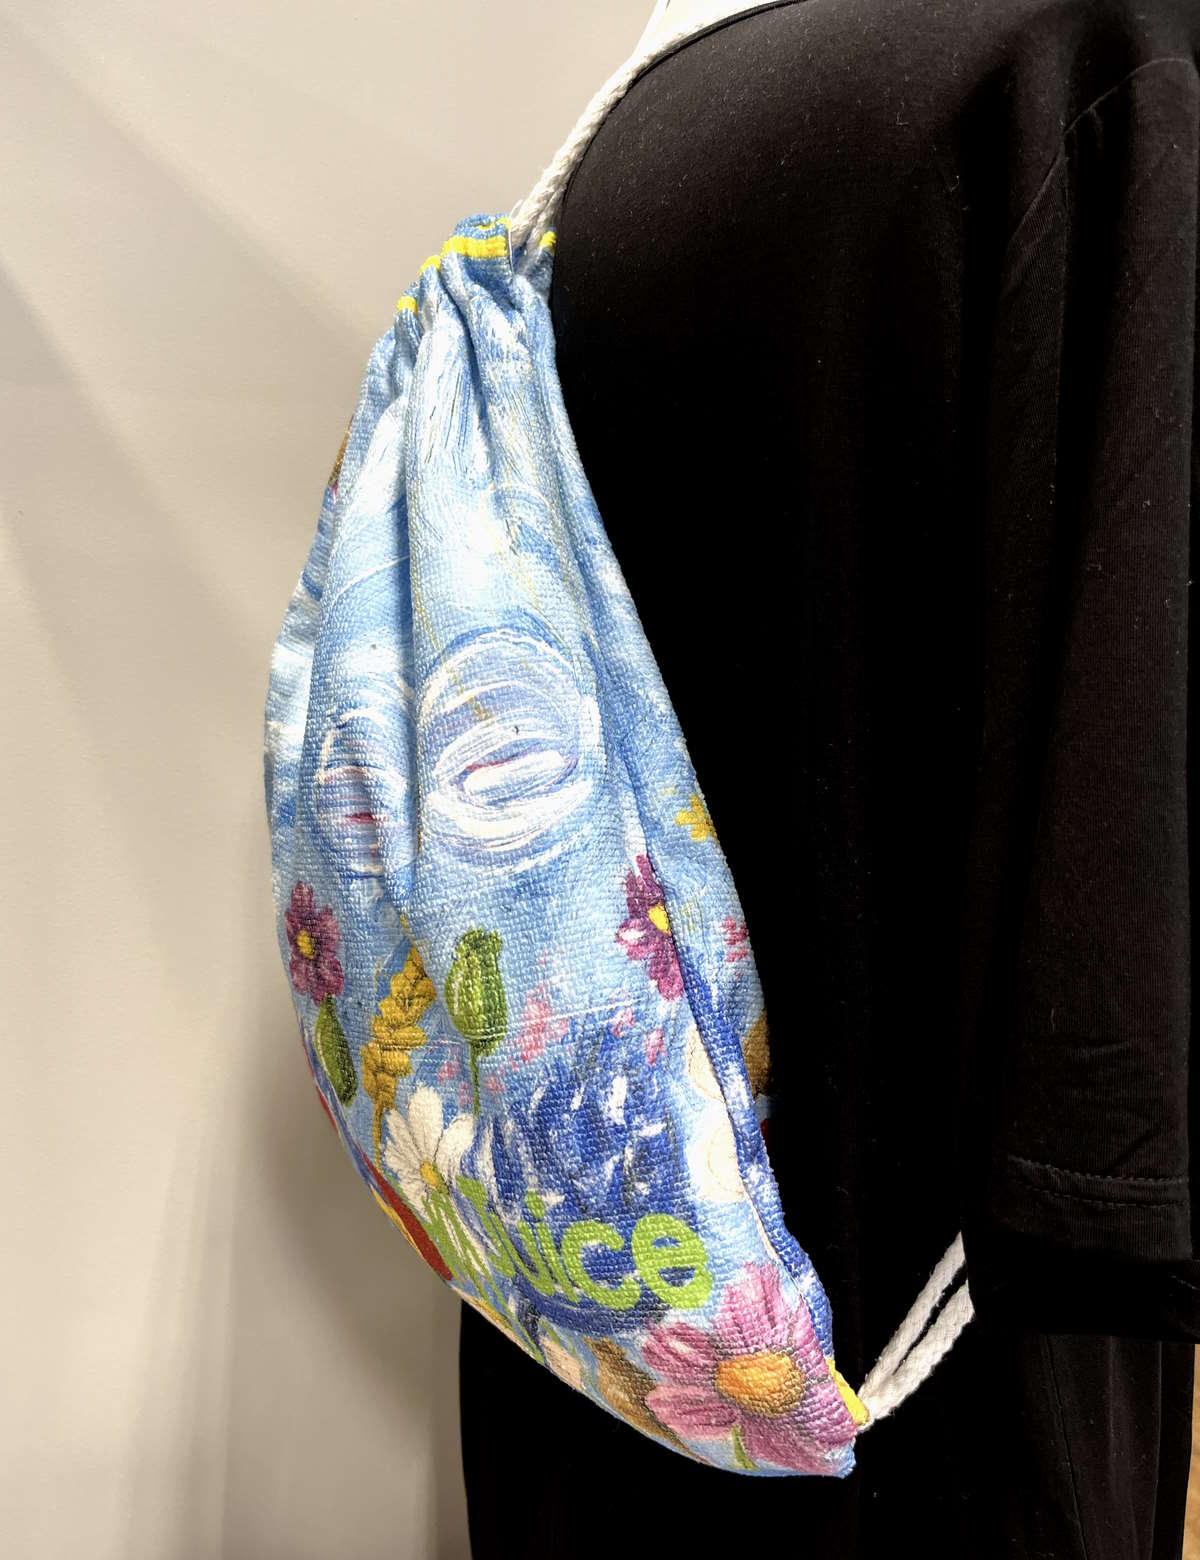 Brand Juice, Transformable beach towel/Drawstring Bag, art. 231029.155